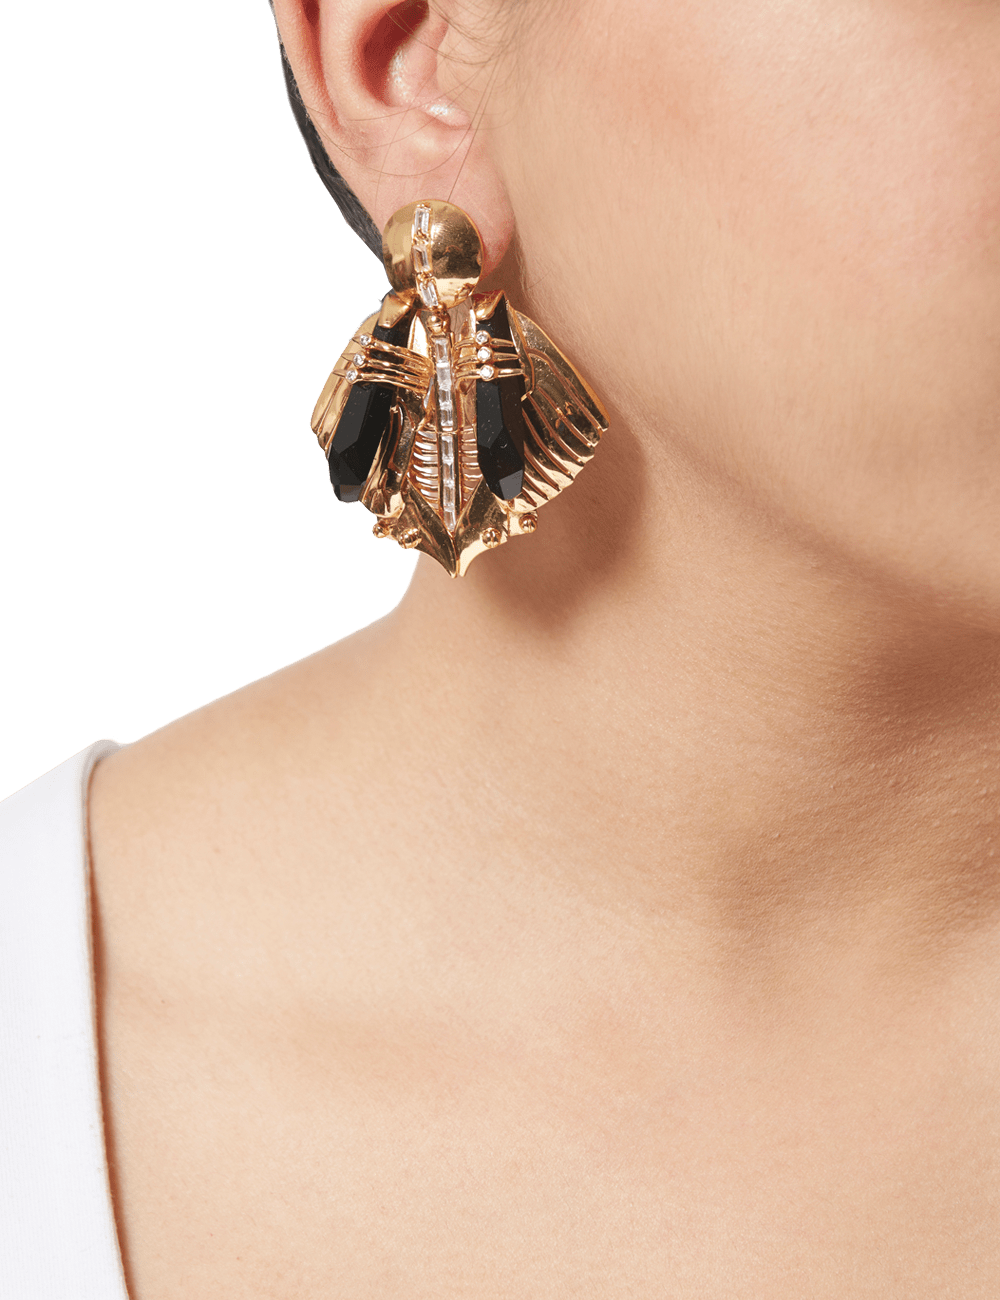 Chrysalis Gold Earrings